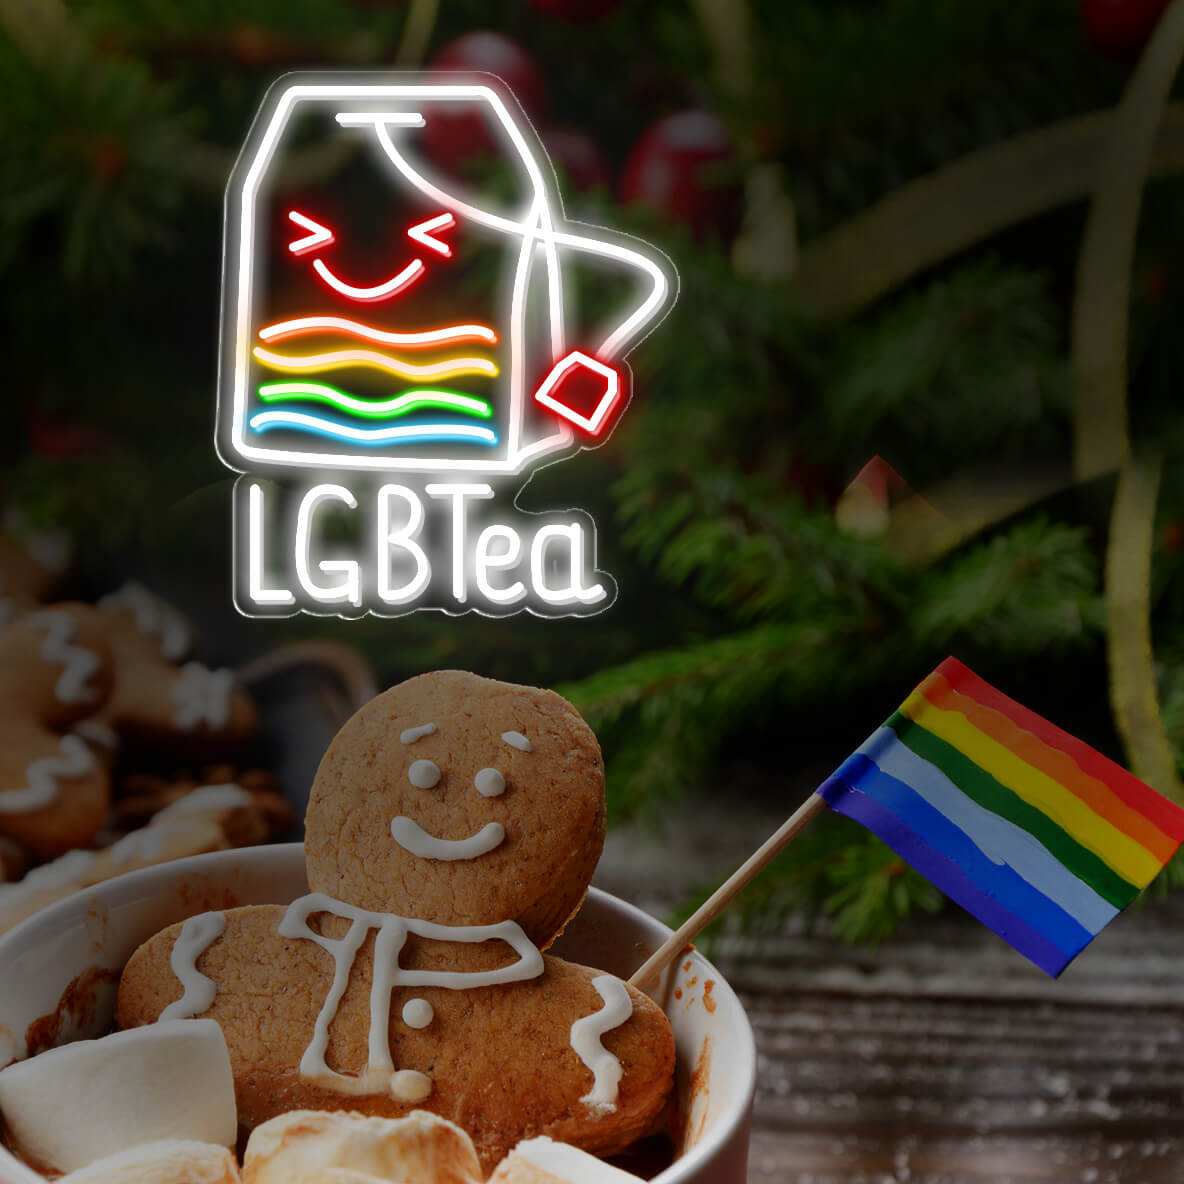 LGBT Neon Signs Led Light, LGBTea Pride Neon Sign 1